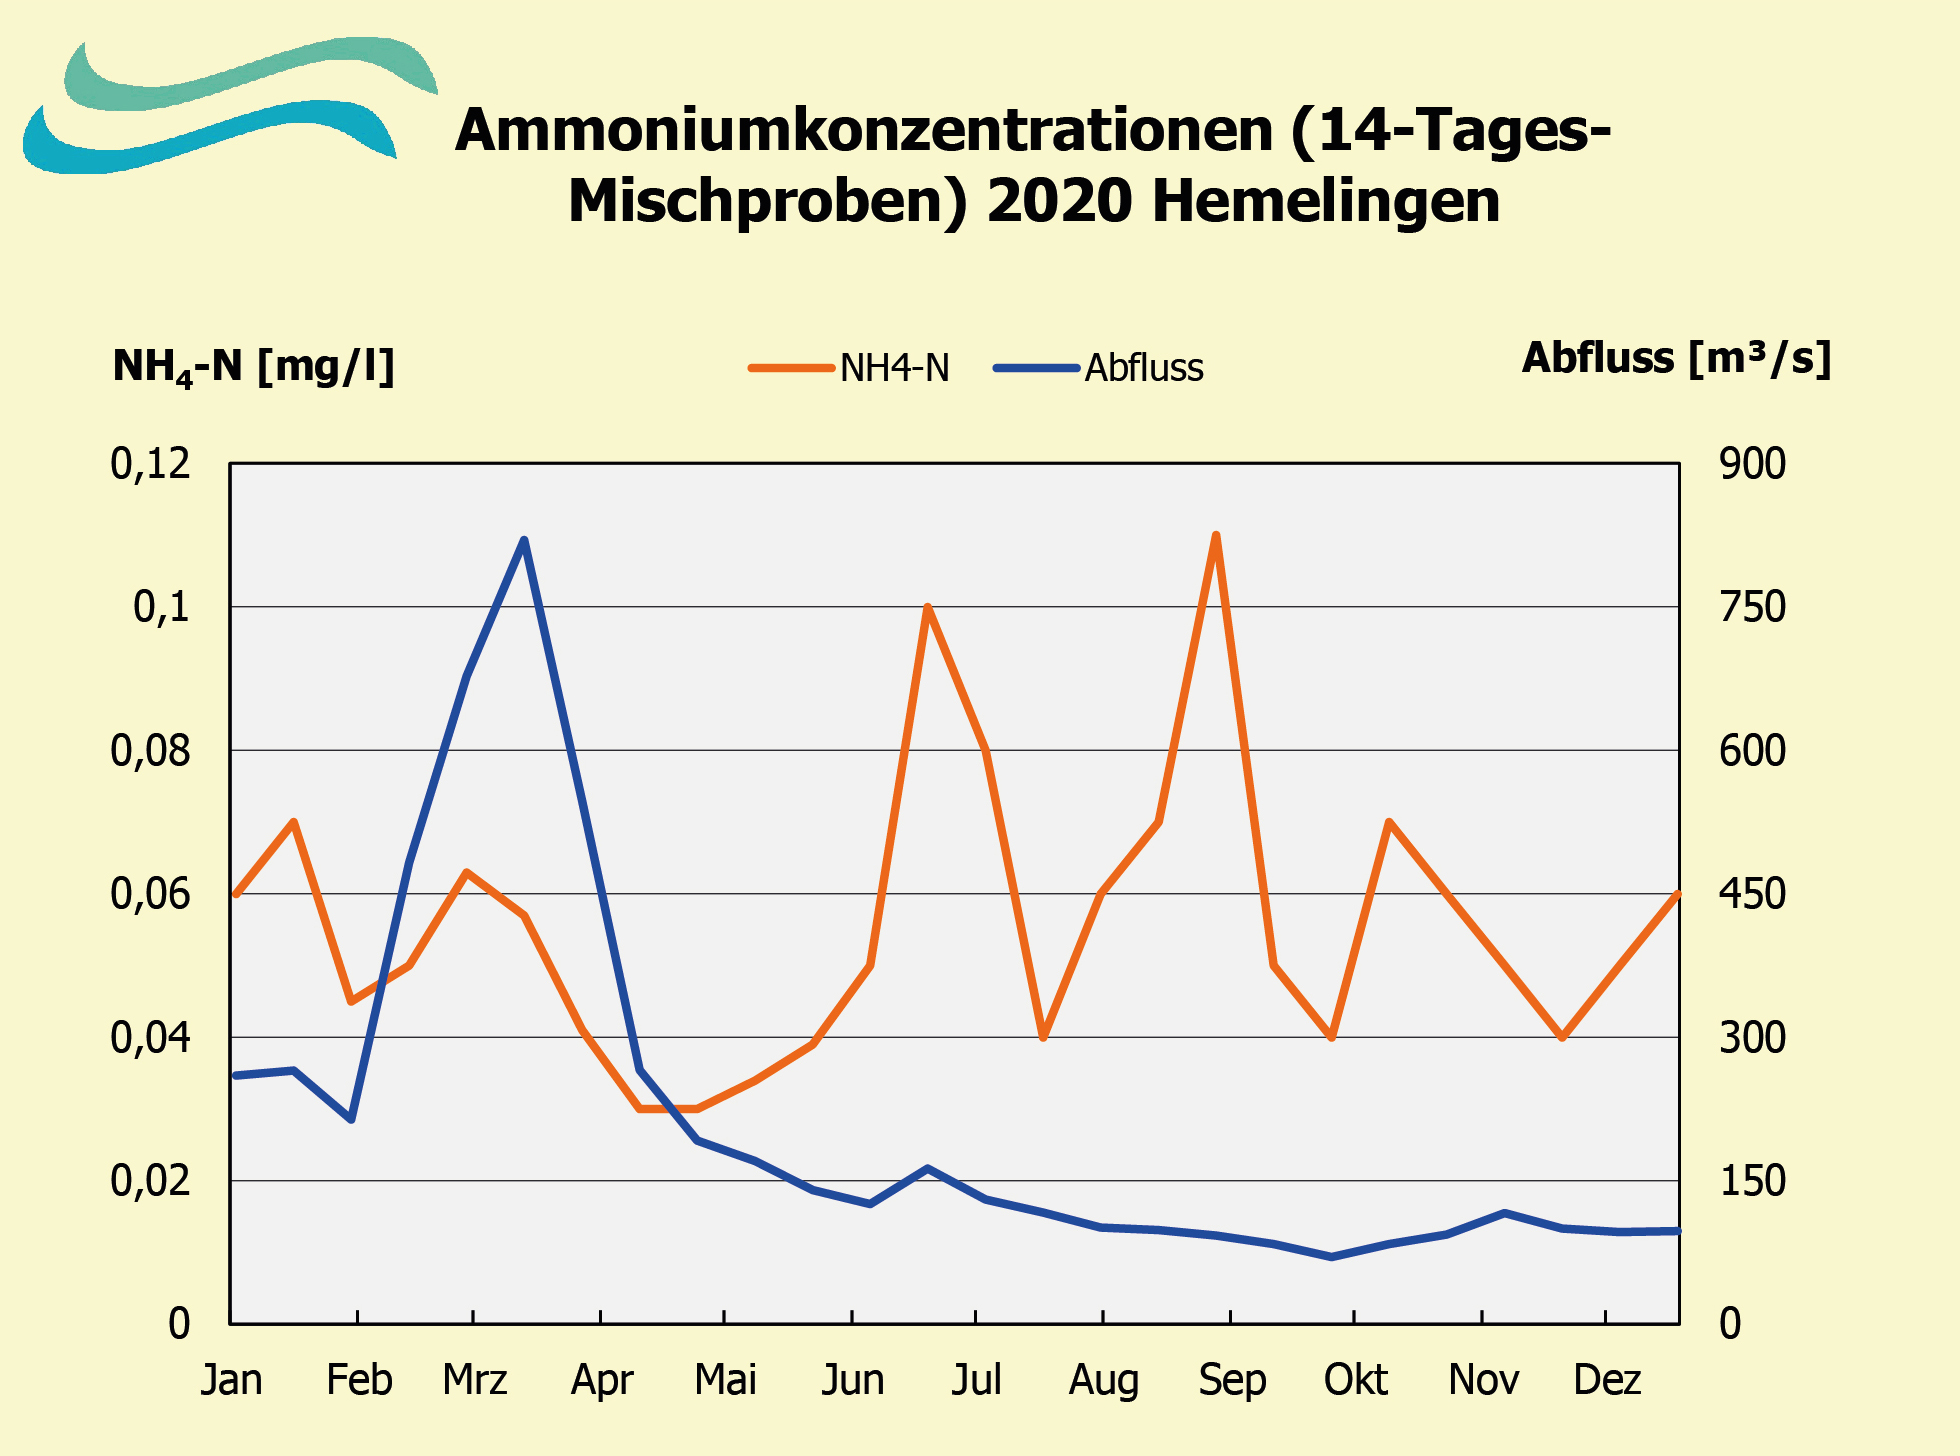 Ammoniumkonzentration Hemelingen 2020